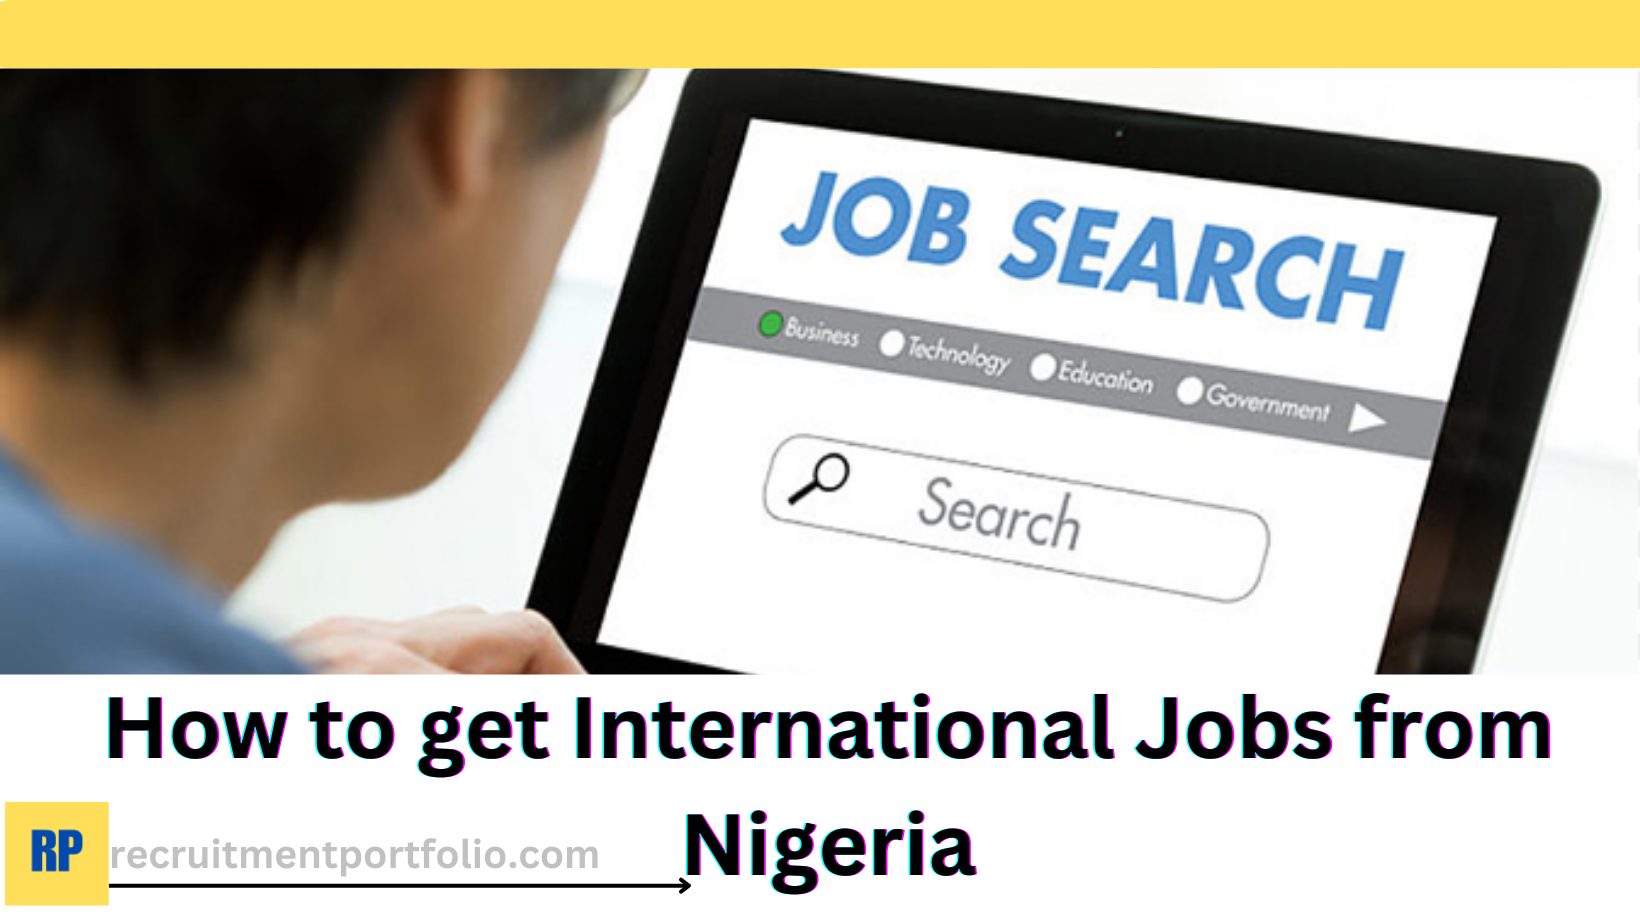 How to get International Jobs